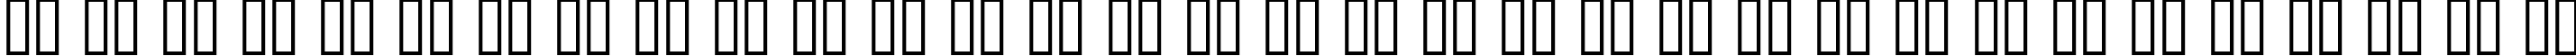 Пример написания русского алфавита шрифтом Macaroni